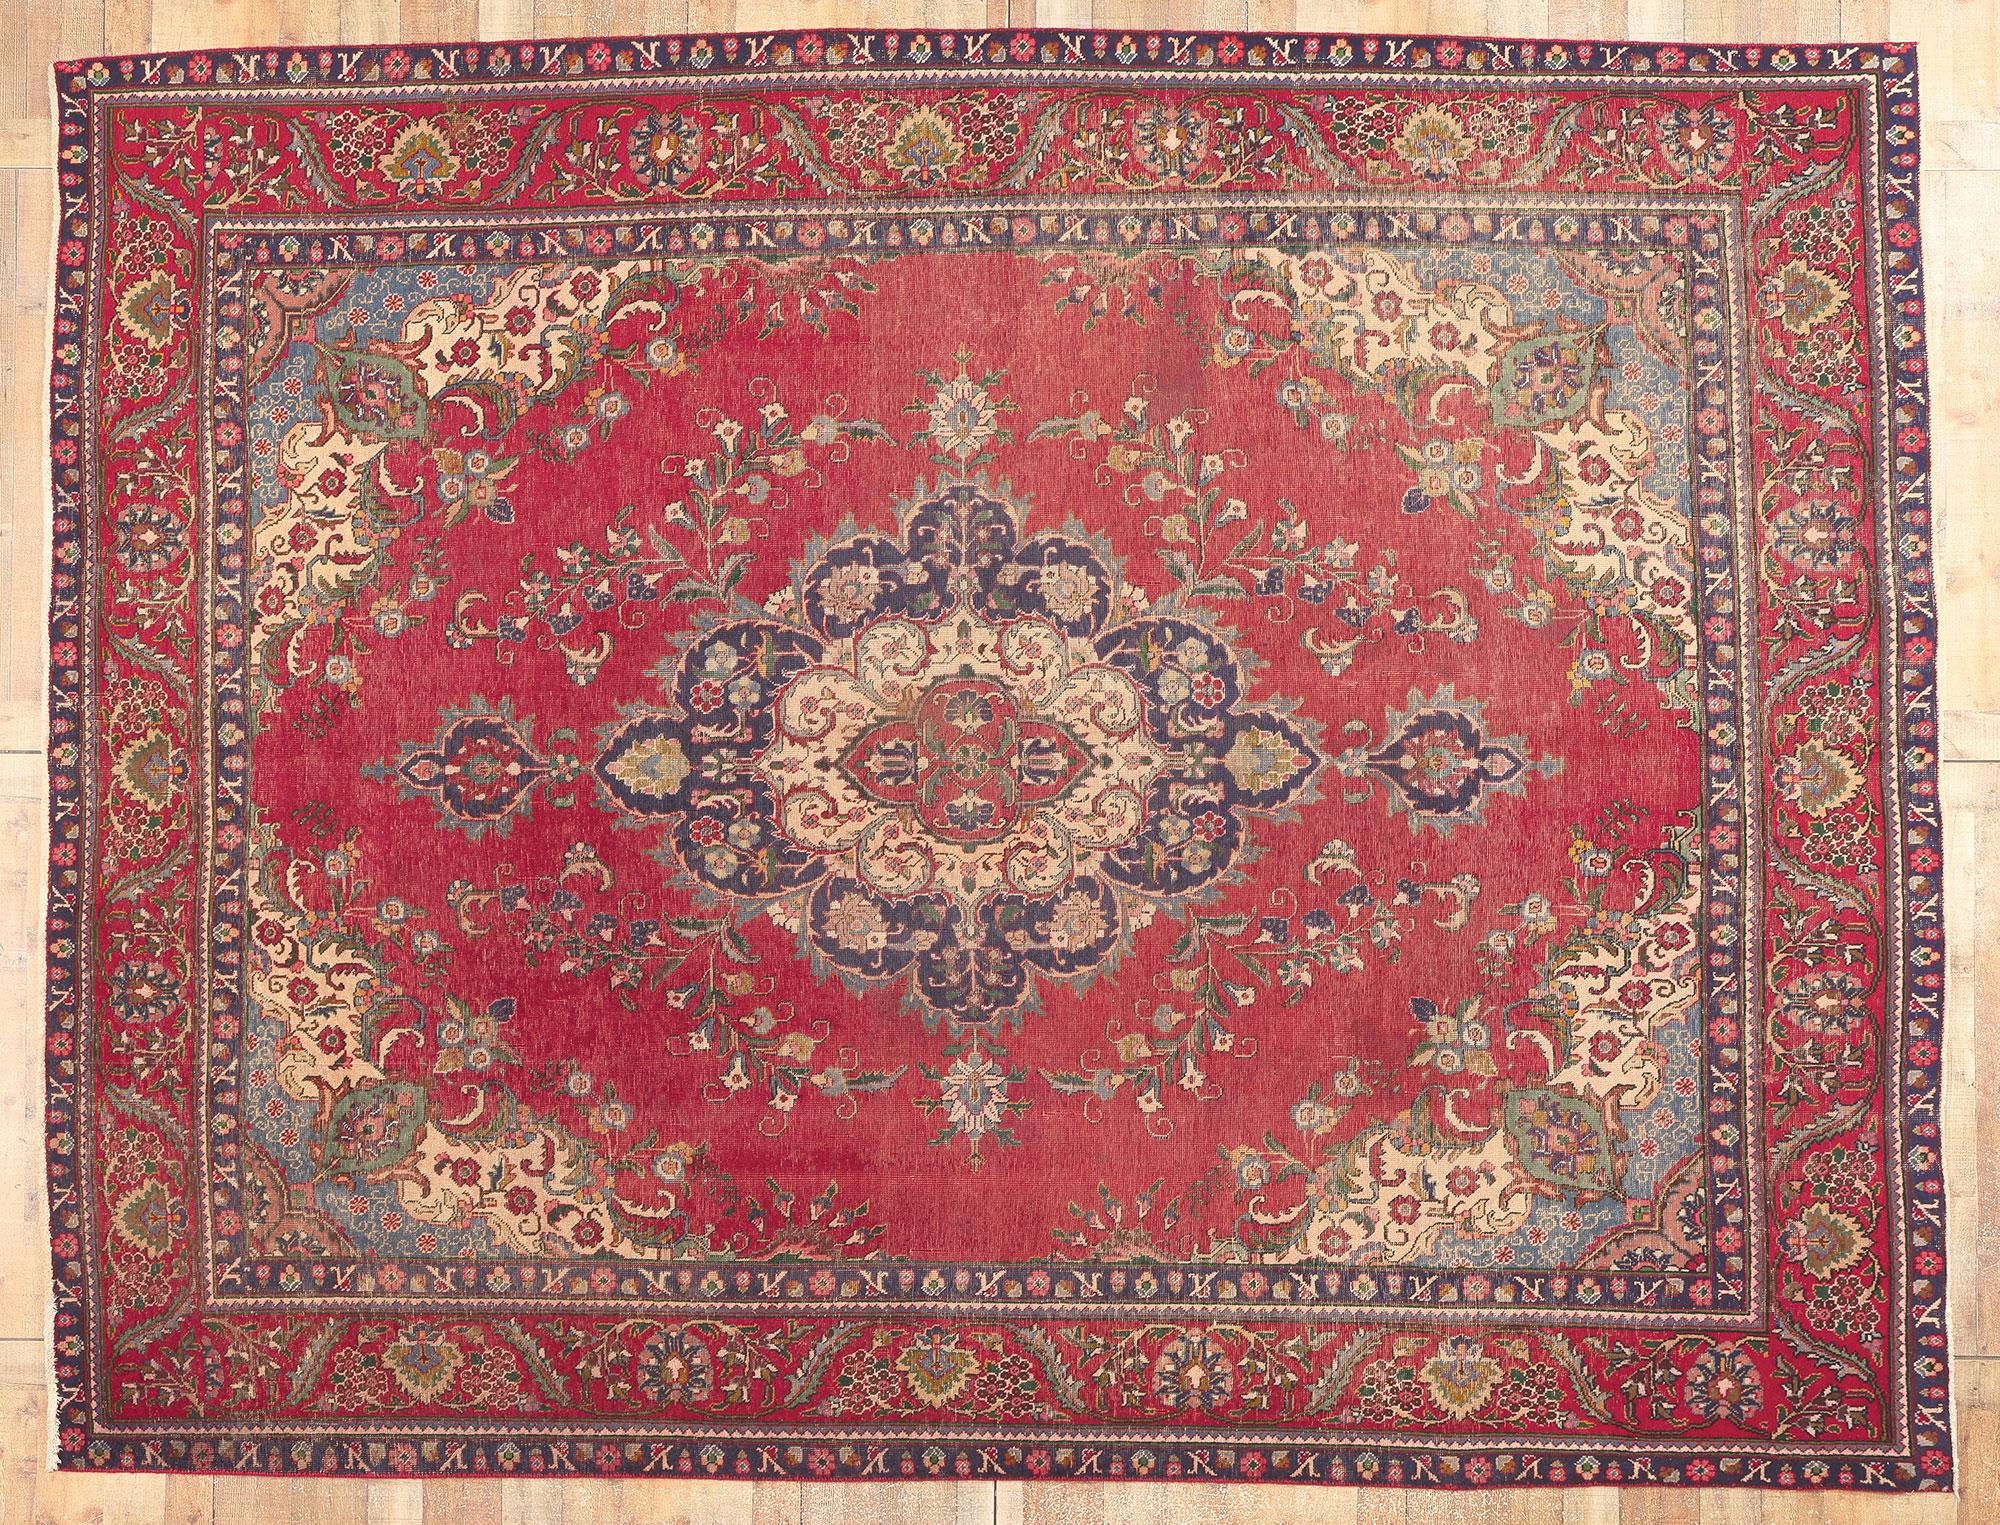 Antique-Worn Persian Tabriz Rug, Rustic Sensibility Meets Nostalgic Charm For Sale 3